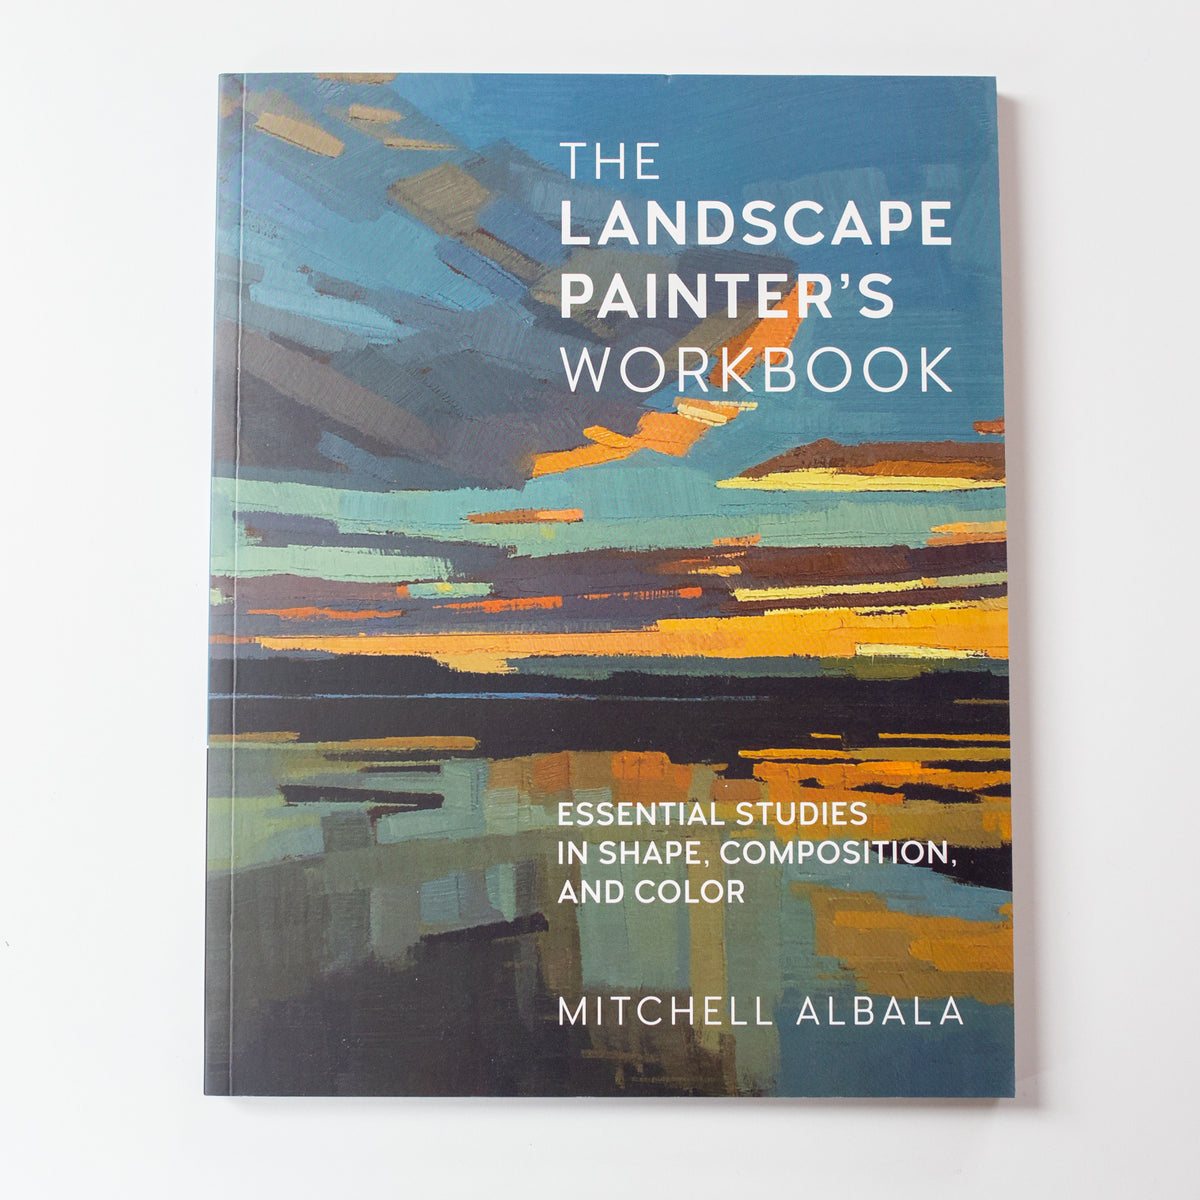 The landscape painter's workbook by Mitchell Albala